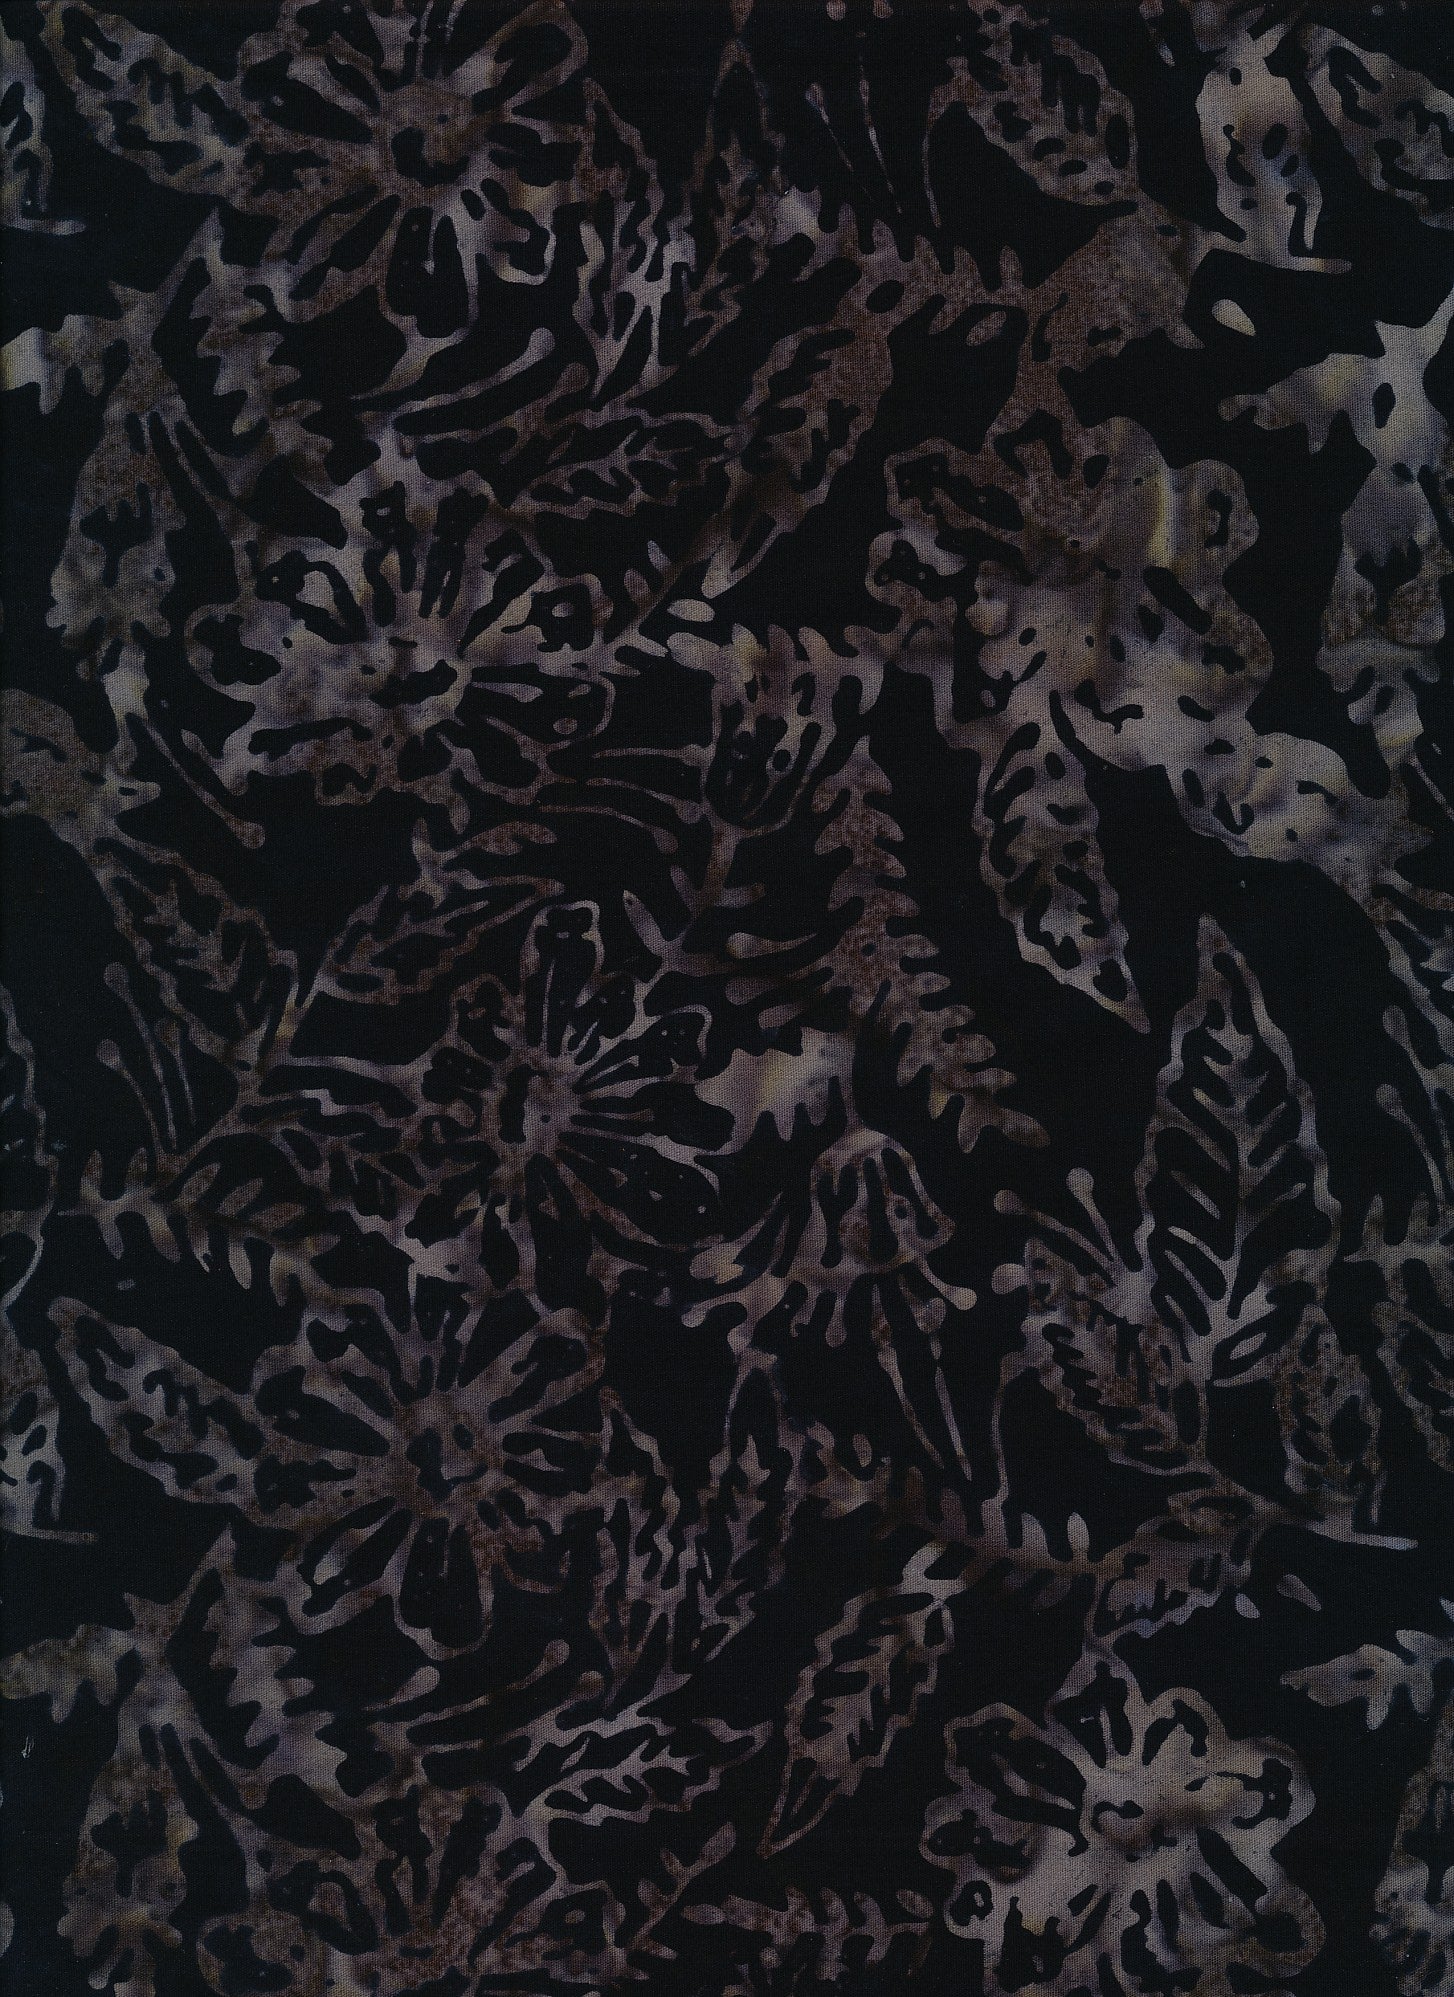 Majestic Batiks Quilt Fabric - Firebrick Daisy Floral in Black - Firebrick 191